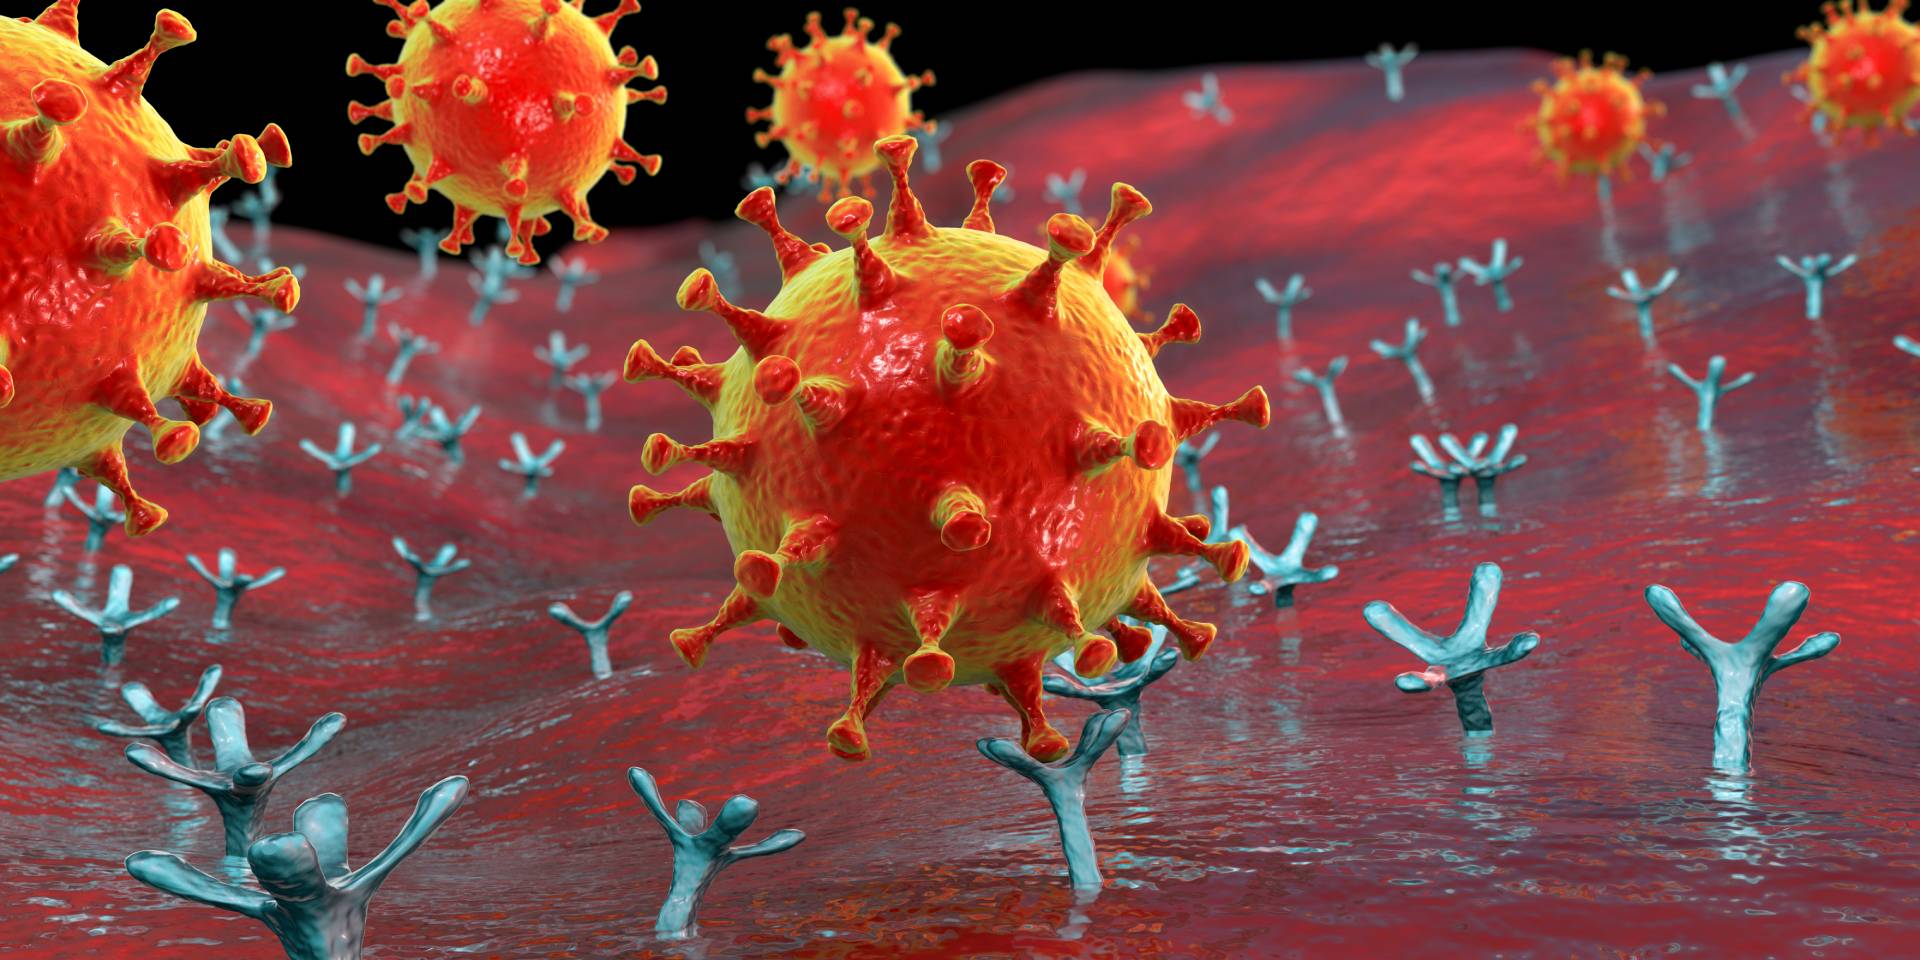 dibujo del virus SARS-CoV-2 y receptores ACE2 que se unen a una célula humana.
Shutterstock / Kateryna Kon